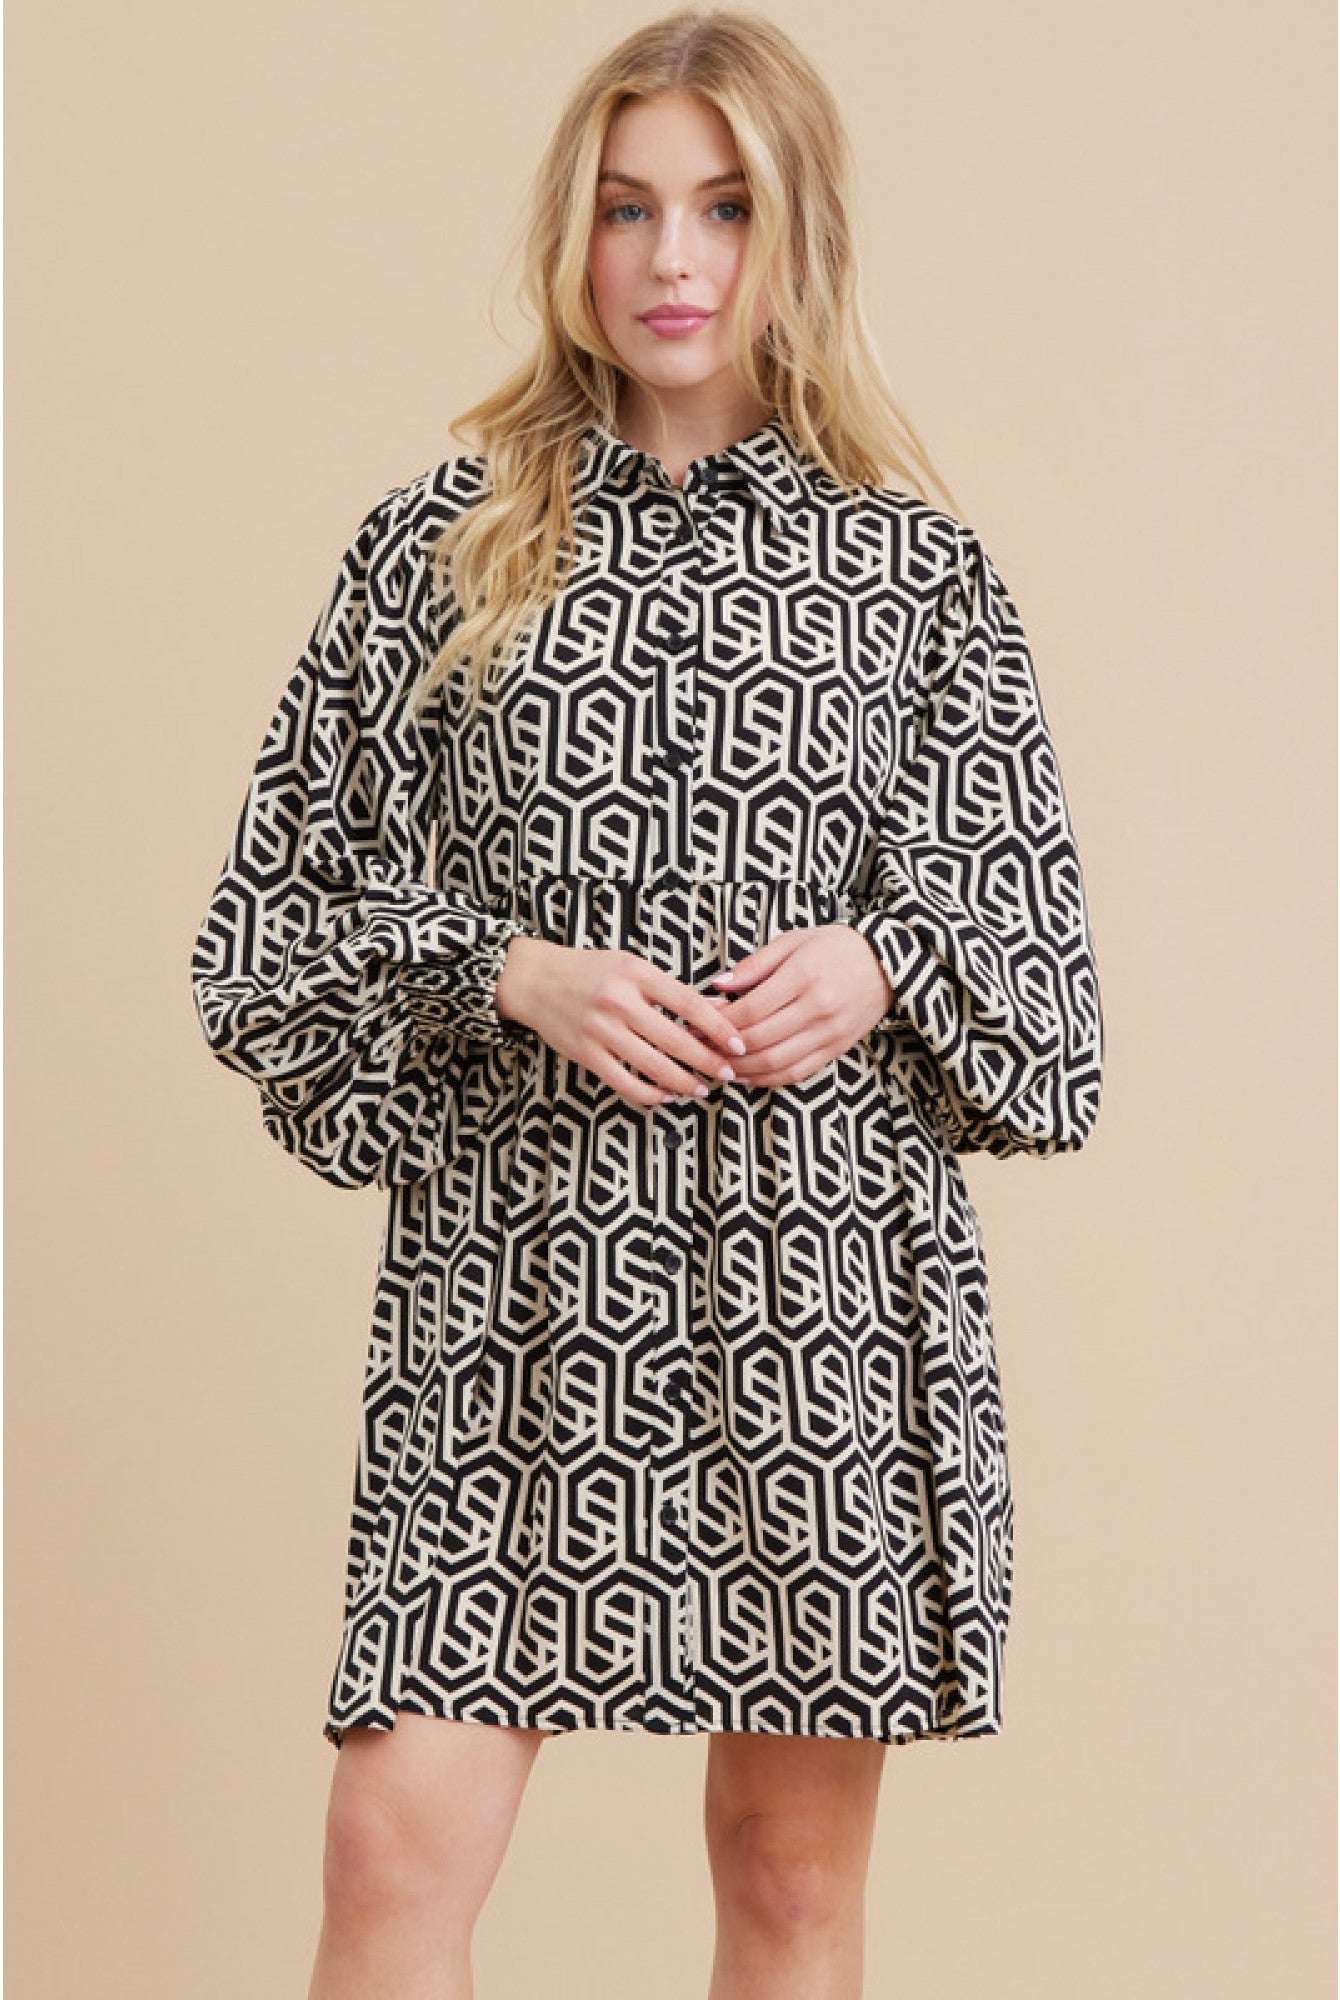 Geometric print Dress-Short Dresses-Podos Boutique, a Women's Fashion Boutique Located in Calera, AL